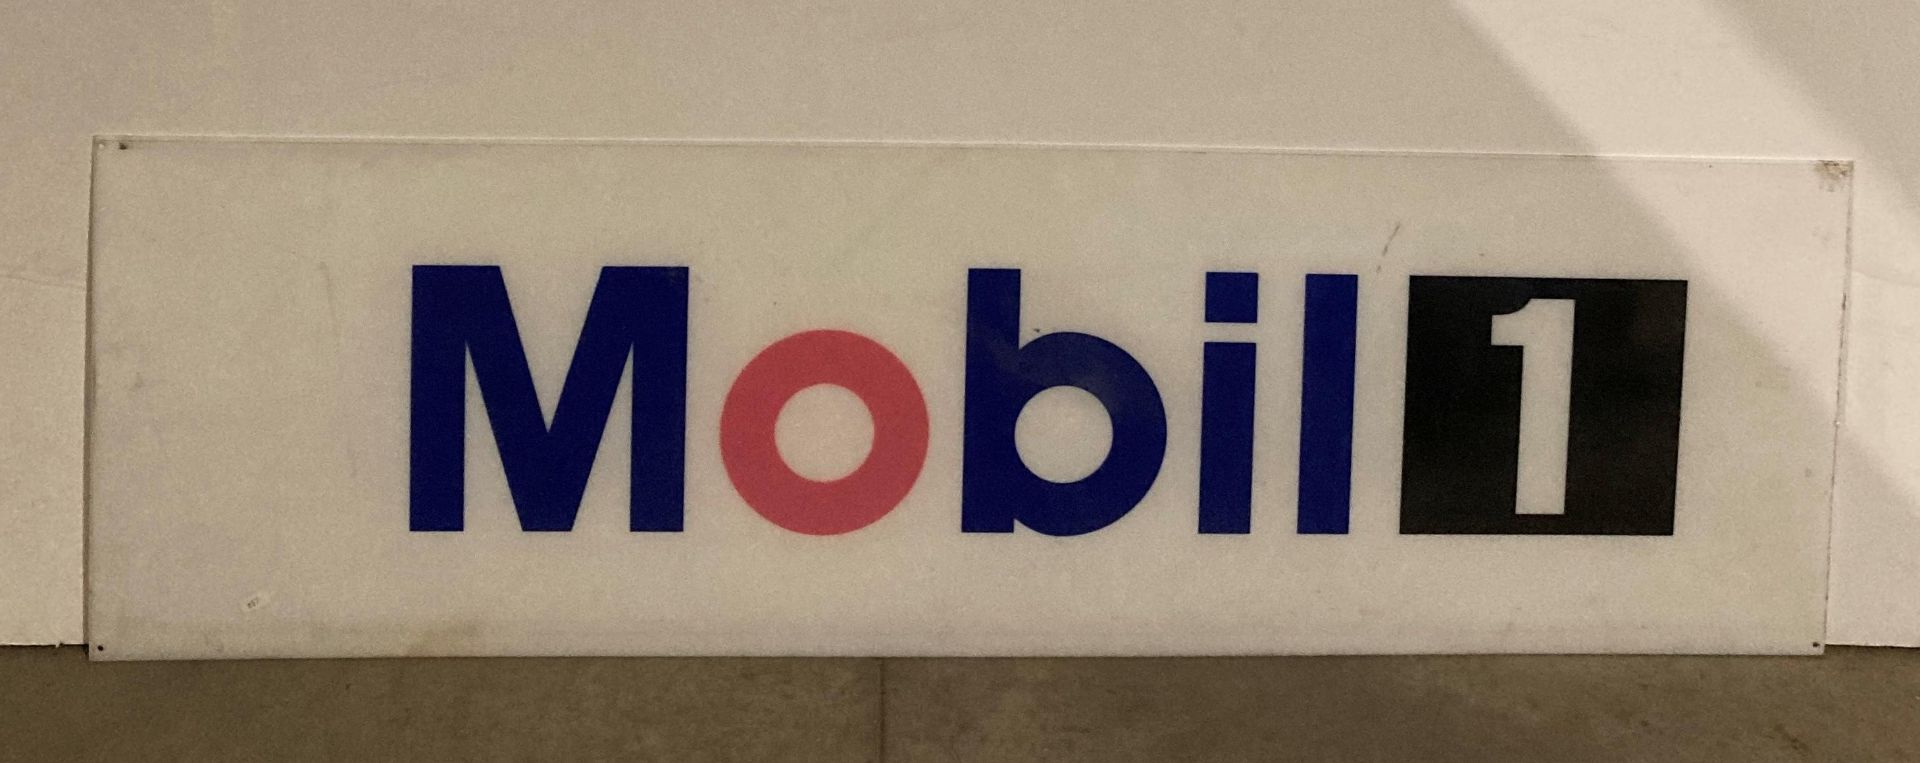 Perspex 'Mobil1 1' sign - size 146 x 44cm (saleroom location: MA1 wall)